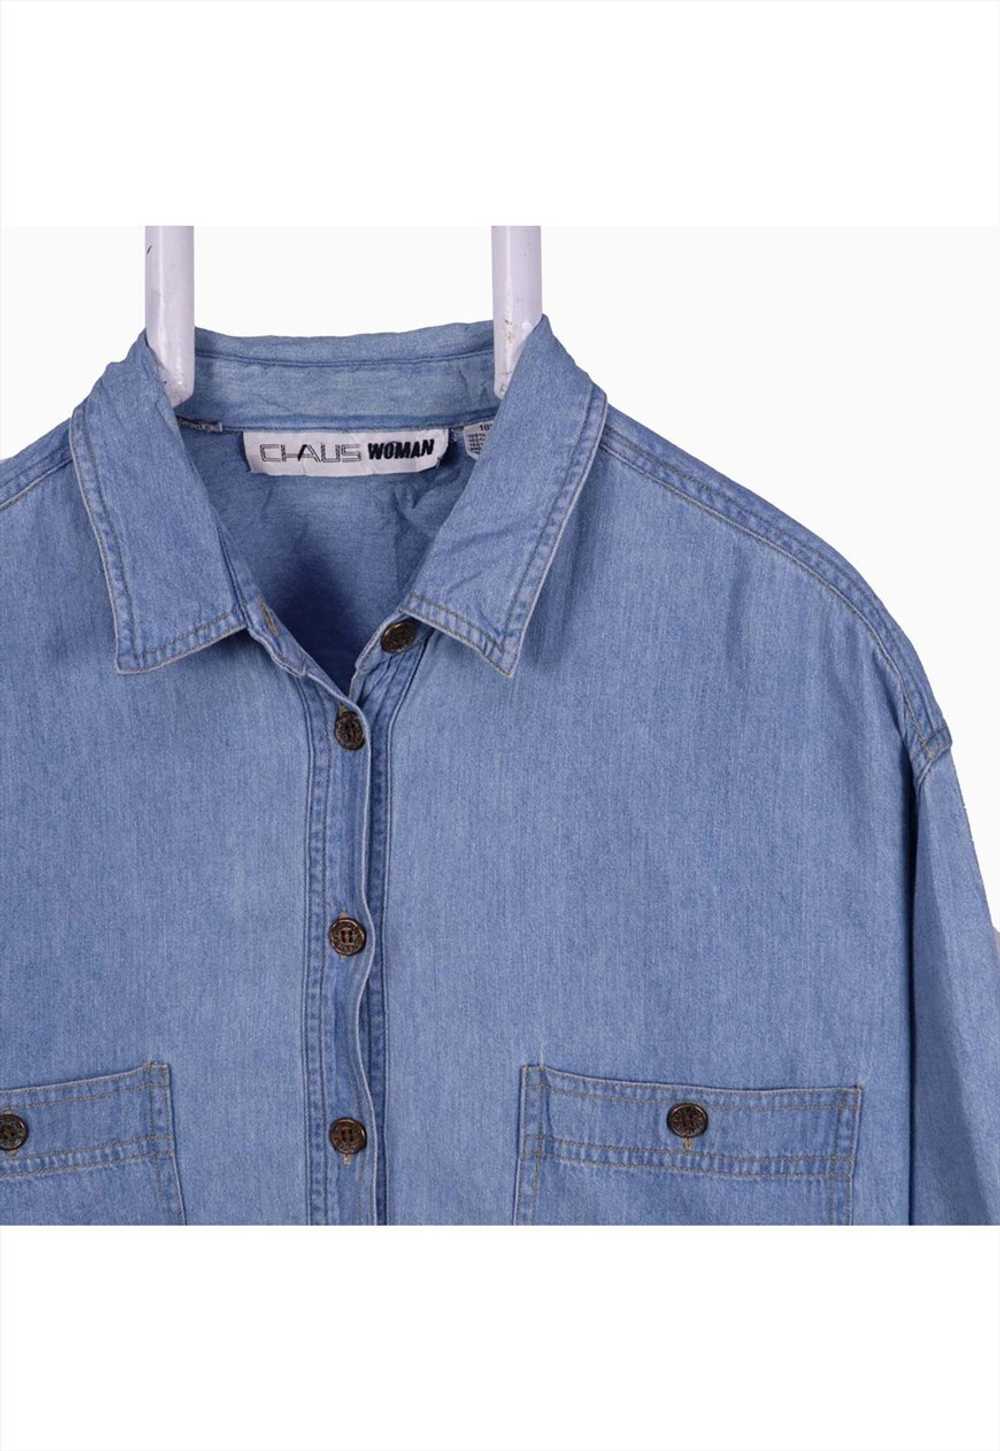 Vintage 90's Chaus Woman Shirt Denim Long Sleeve … - image 3